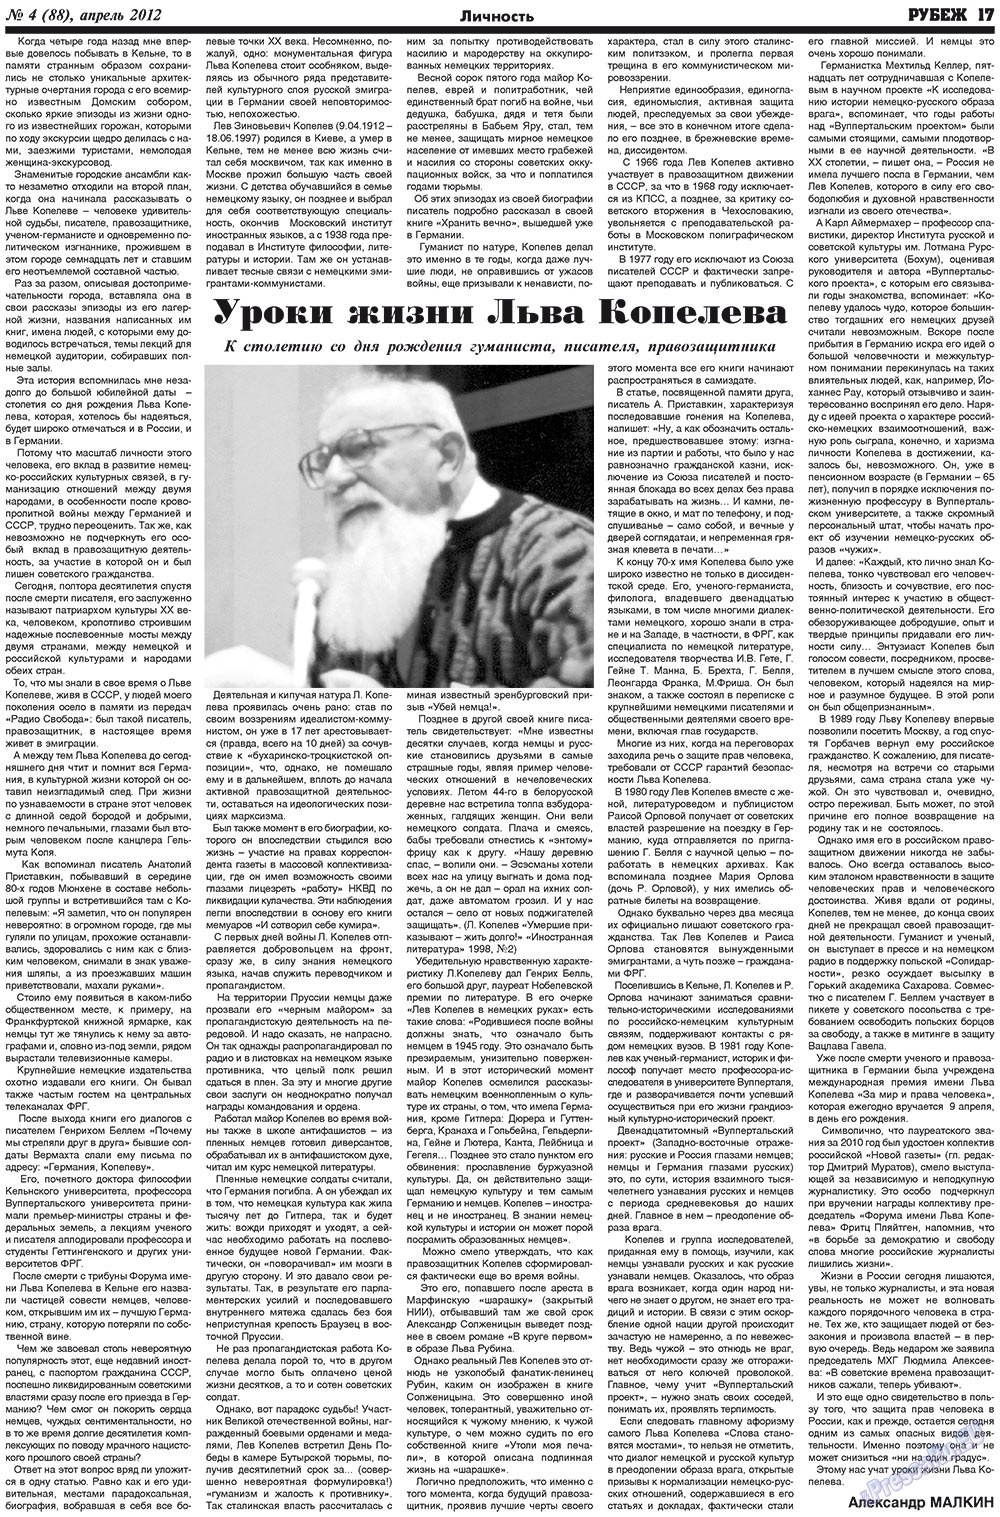 Рубеж, газета. 2012 №4 стр.17